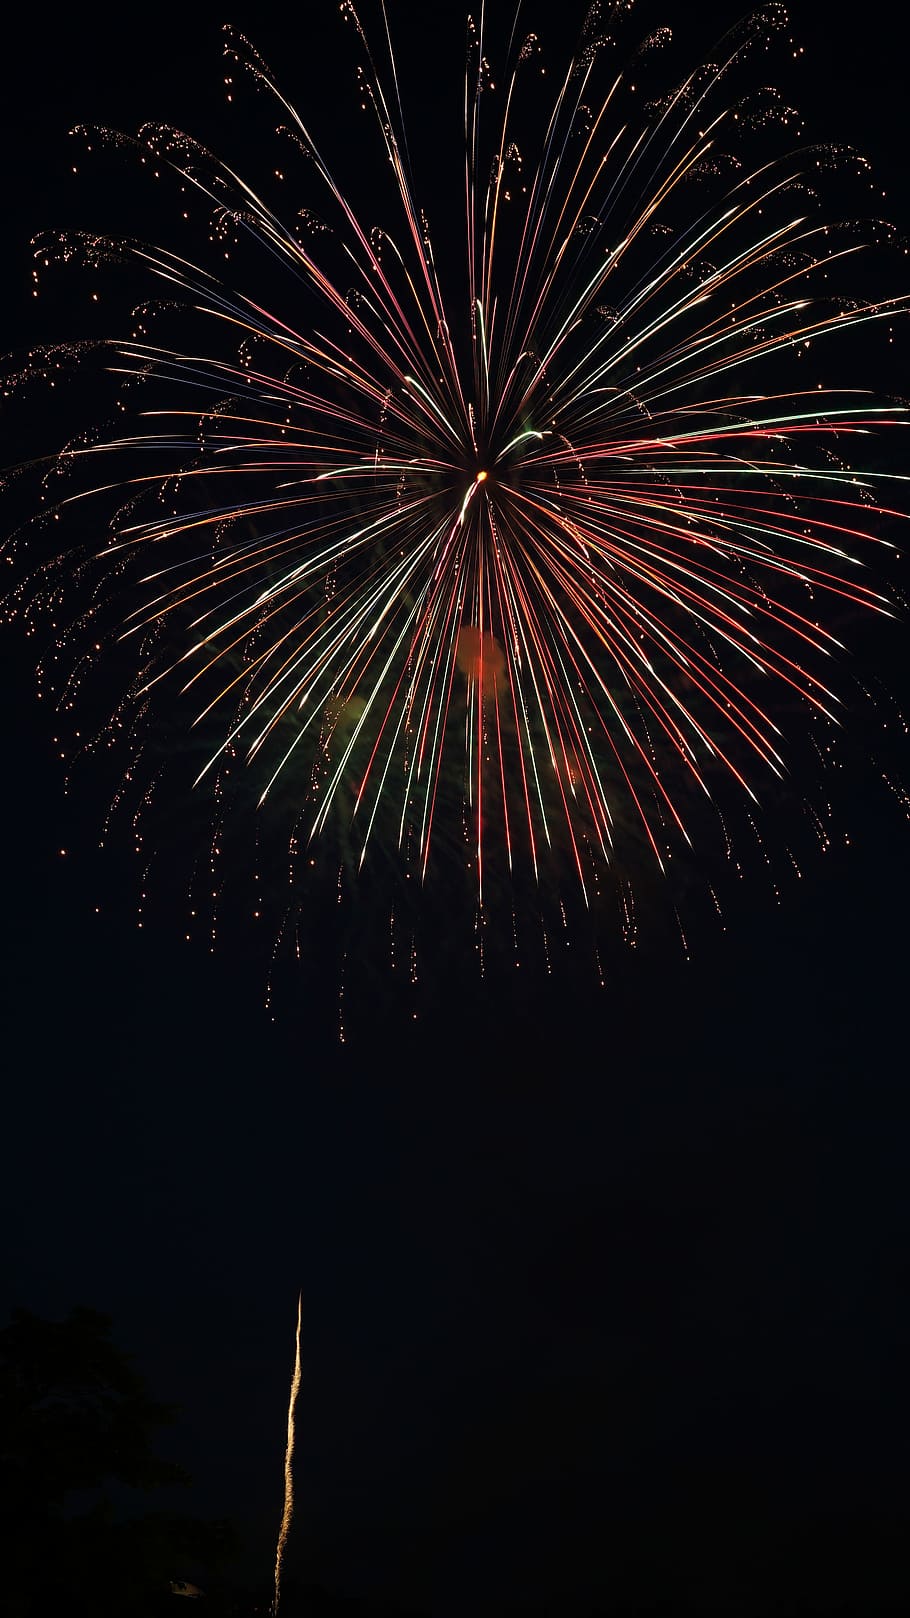 Fireworks, Japan, Night, summer in japan, night sky, light, firework display, exploding, firework - man made object, celebration